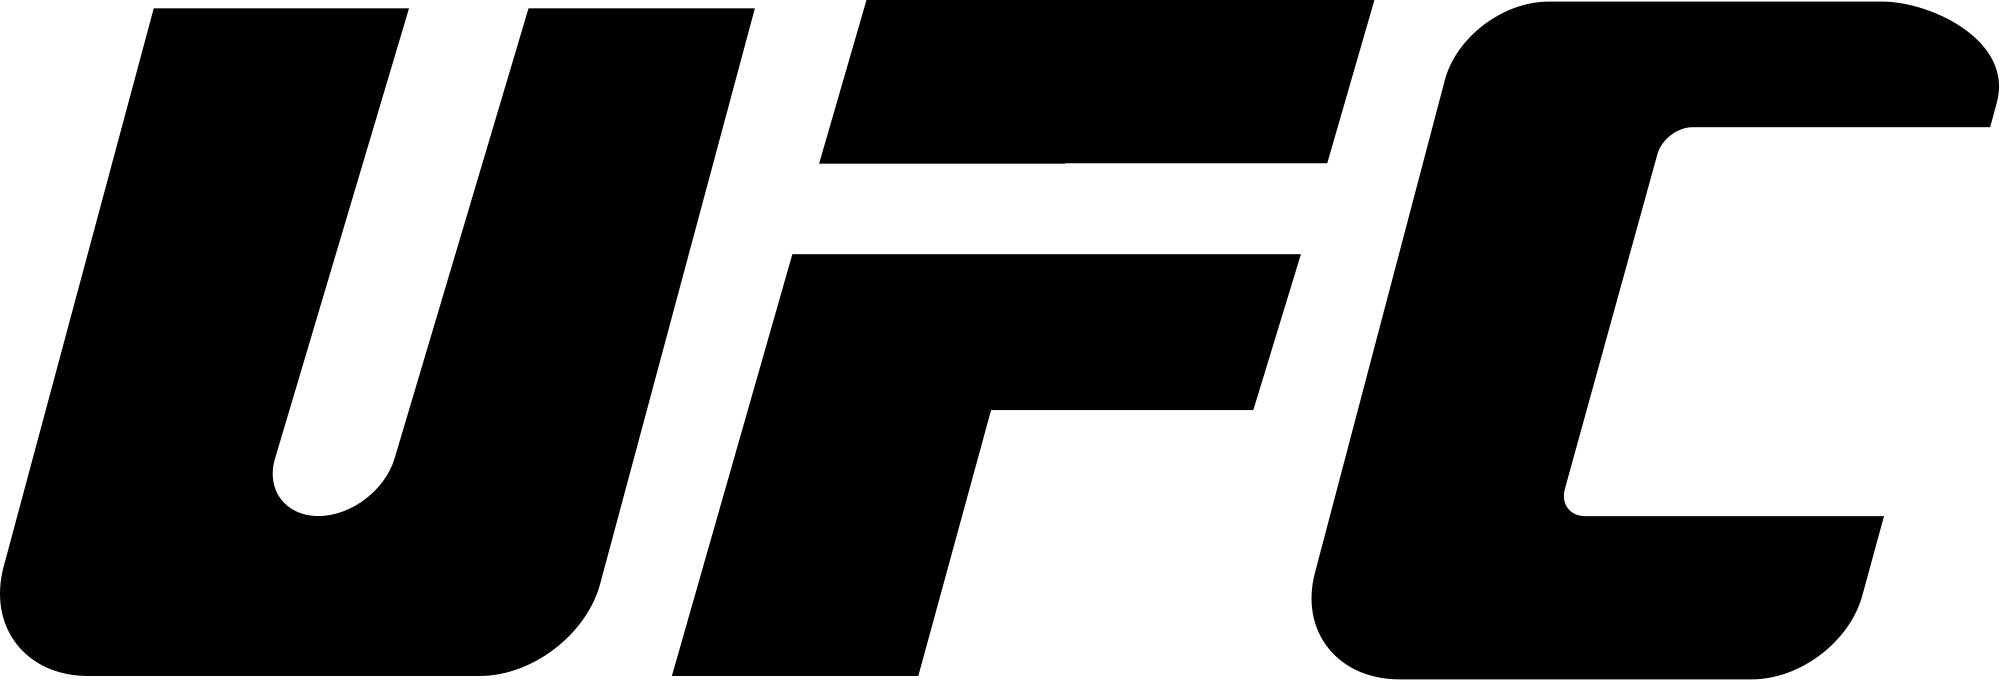 Logotipo UFC